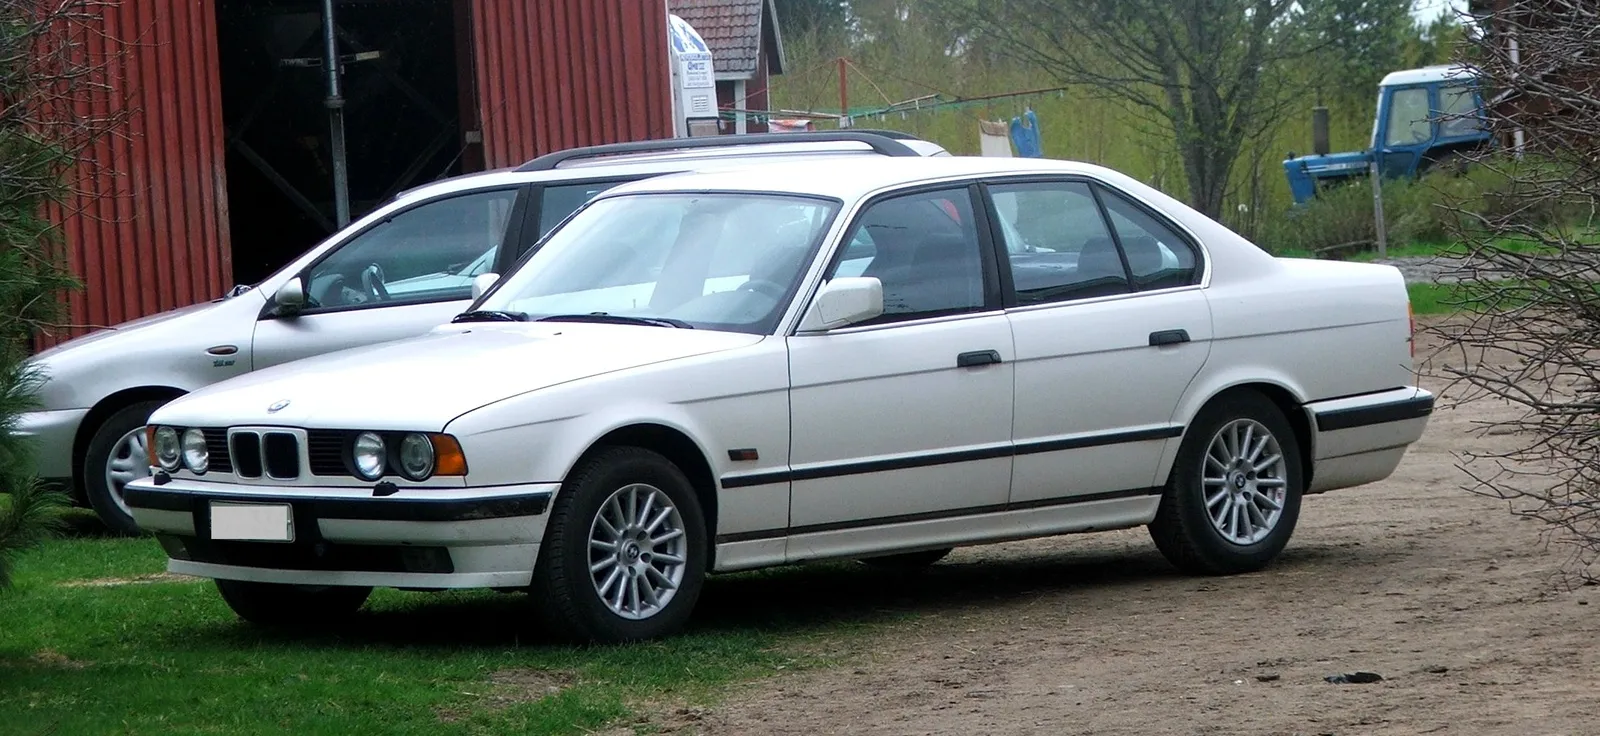 BMW 5 series 518i 1990 photo - 1